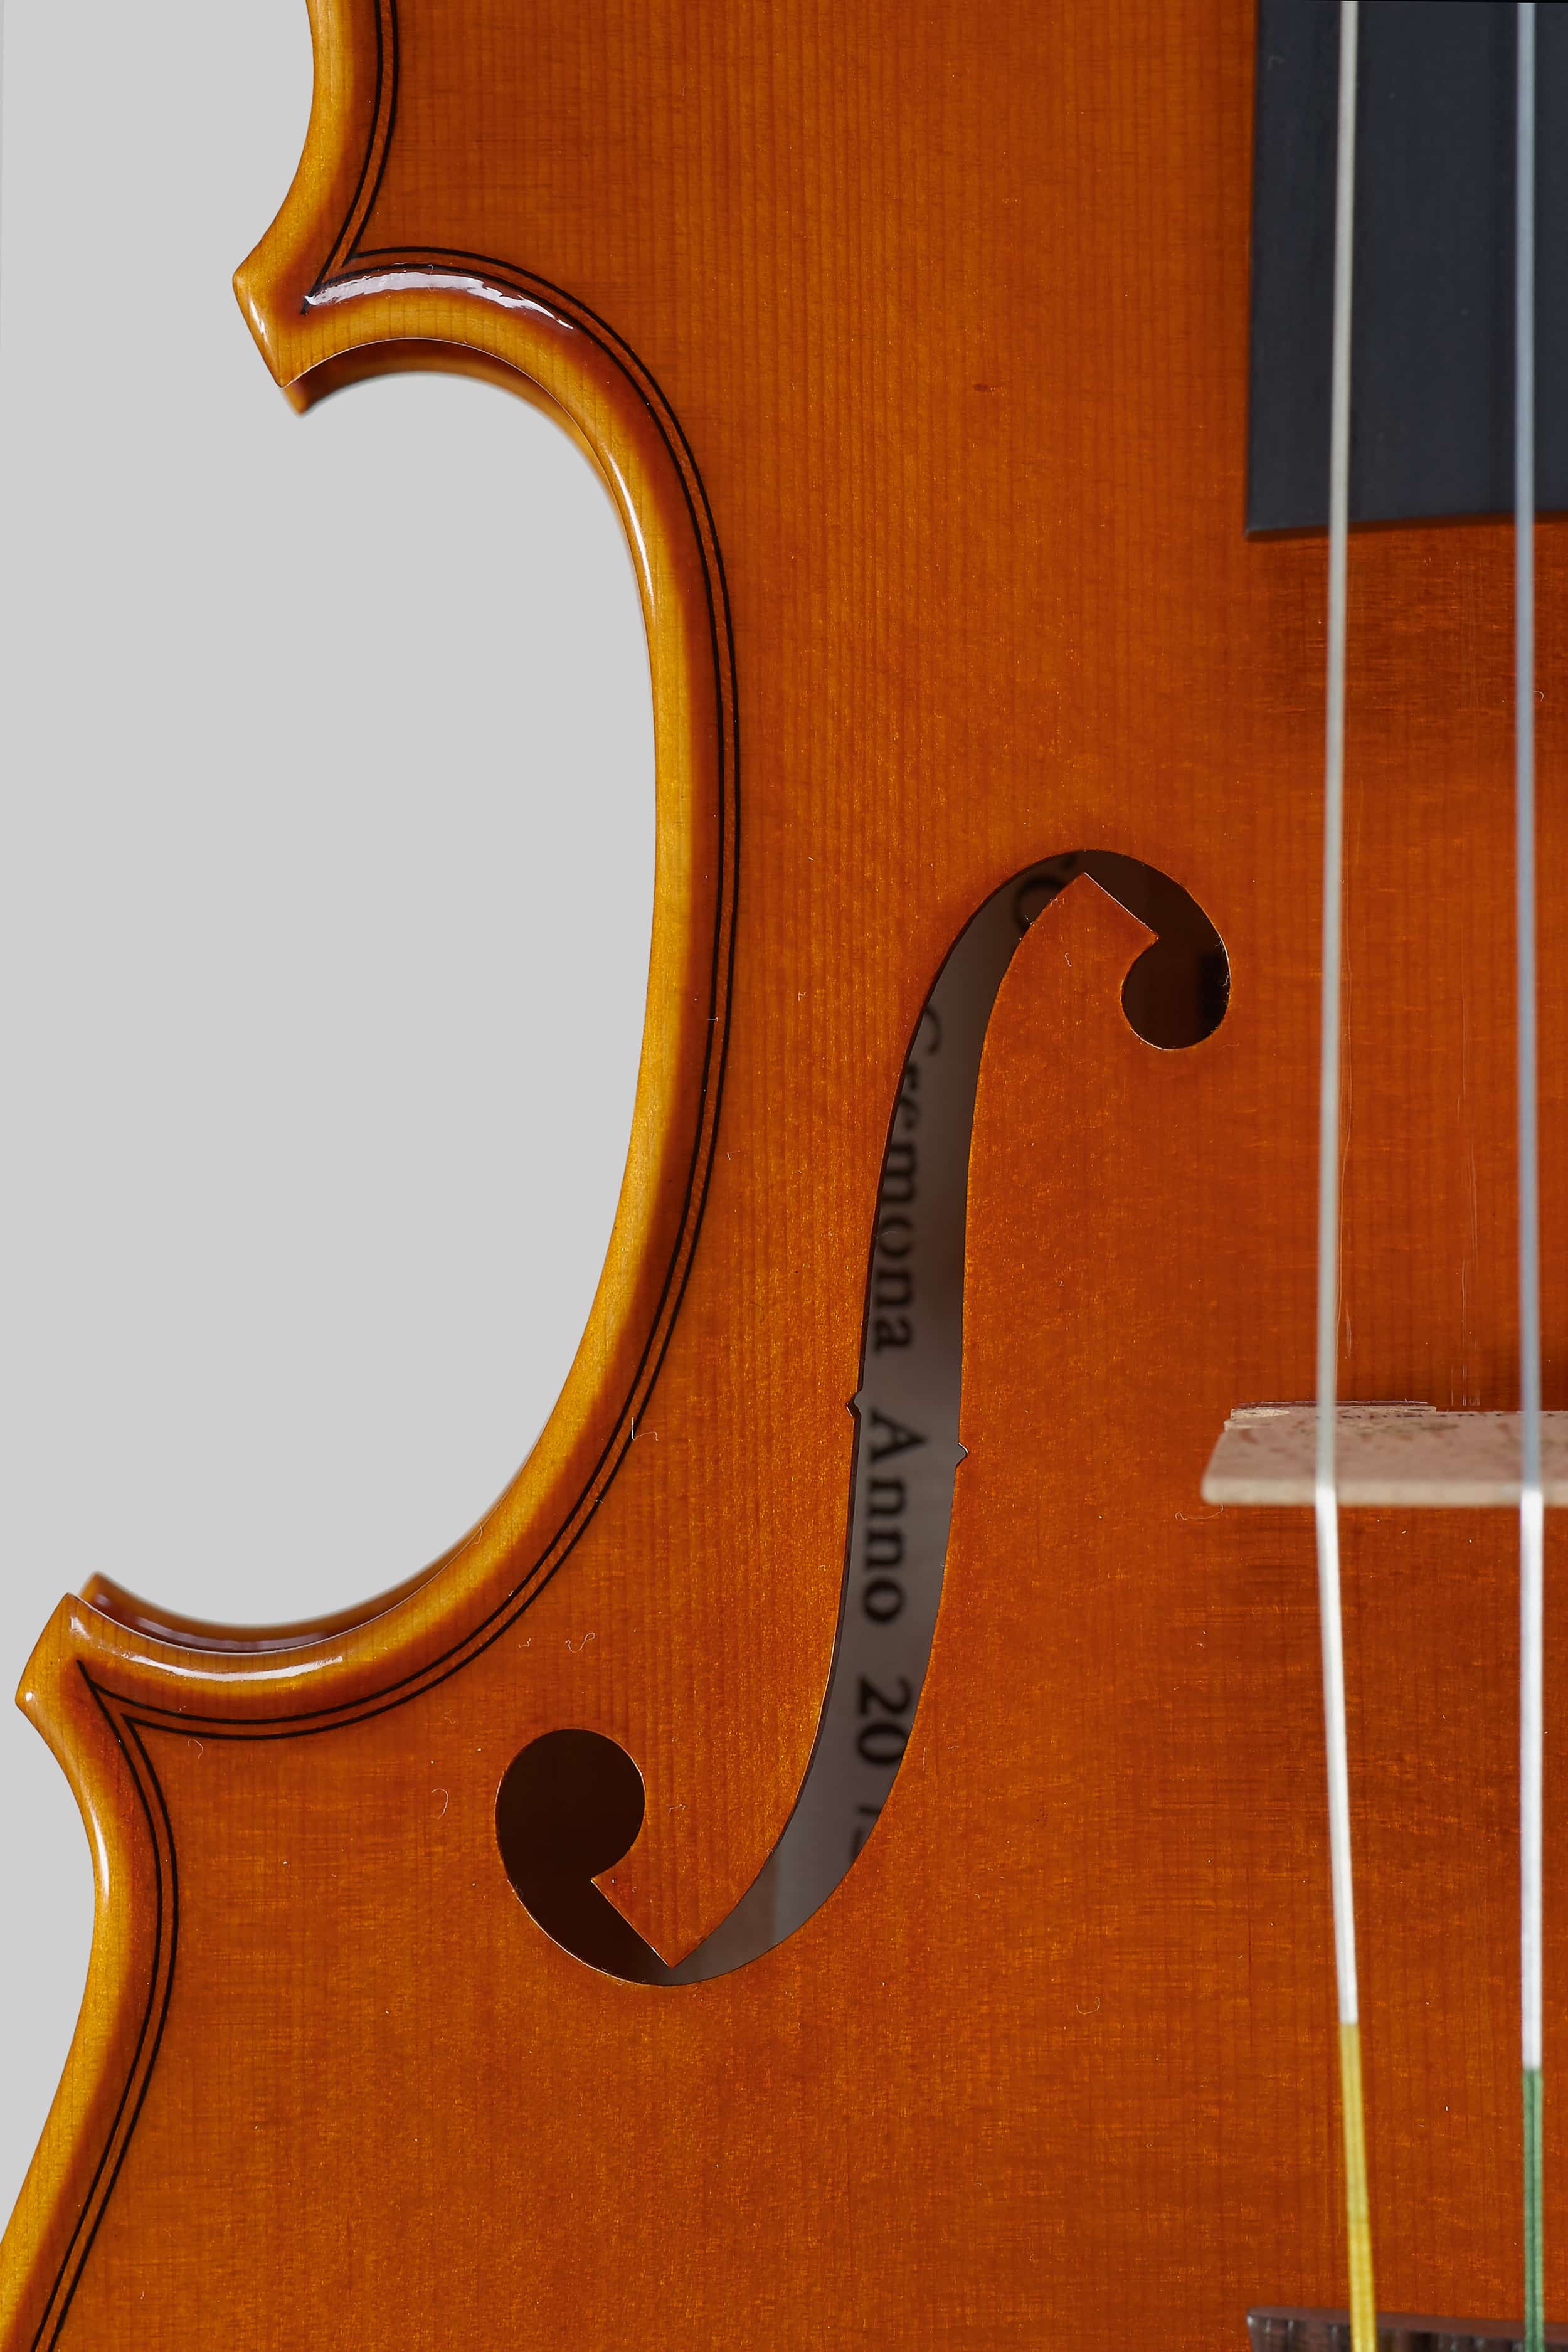 Anno 2015 – Violino modello stile A. Stradivari “Viotti” 1709 - Effe